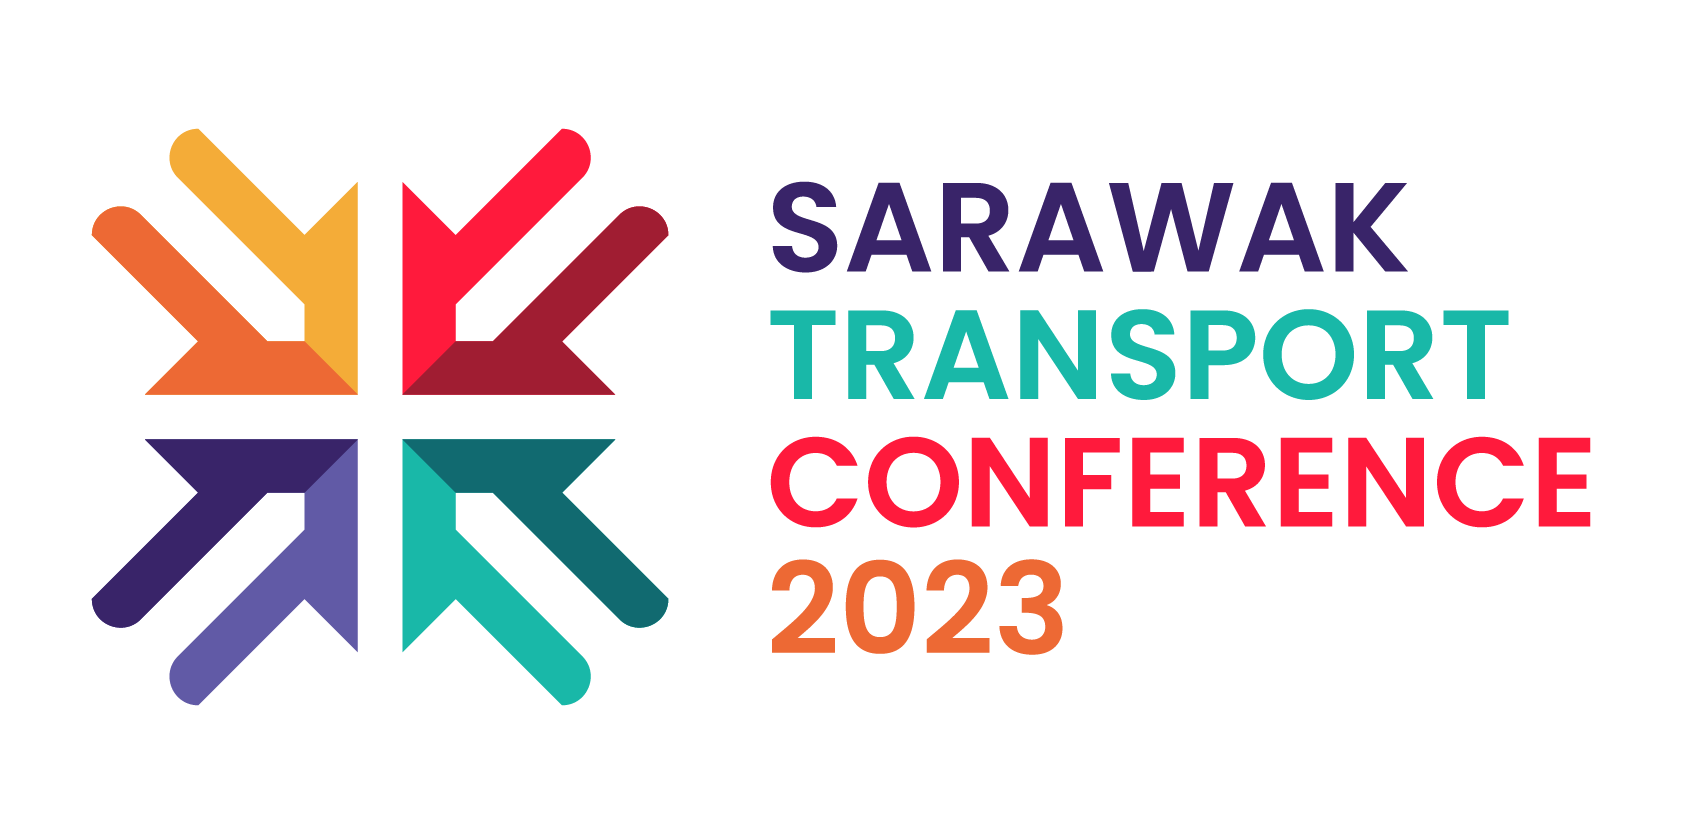 Sarawak Transport Conference